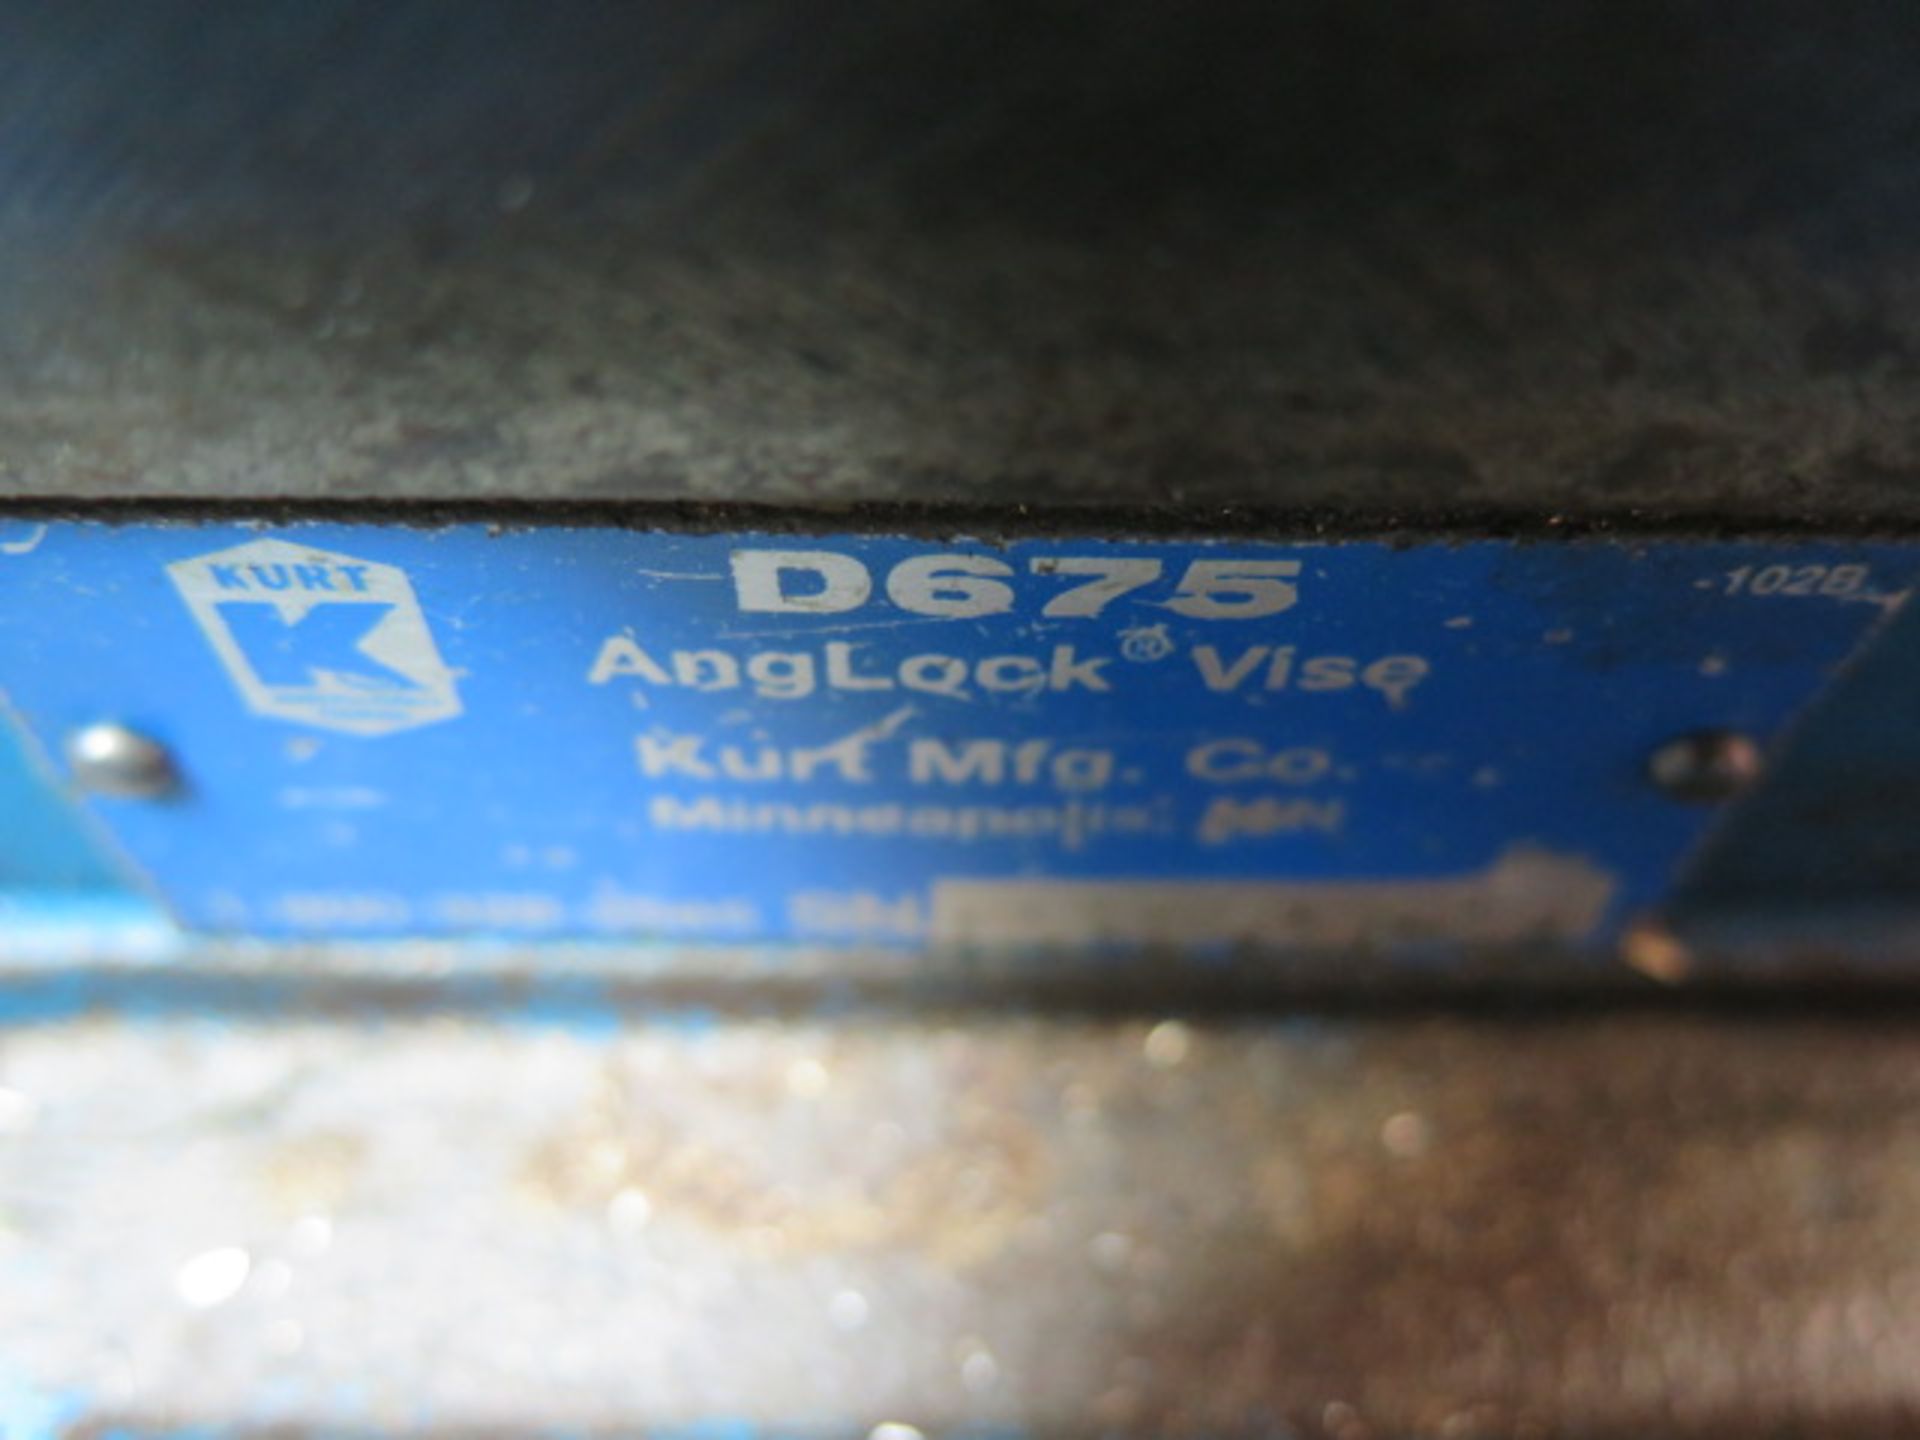 Kurt D675 6" Angle-Lock Vise - Image 3 of 3